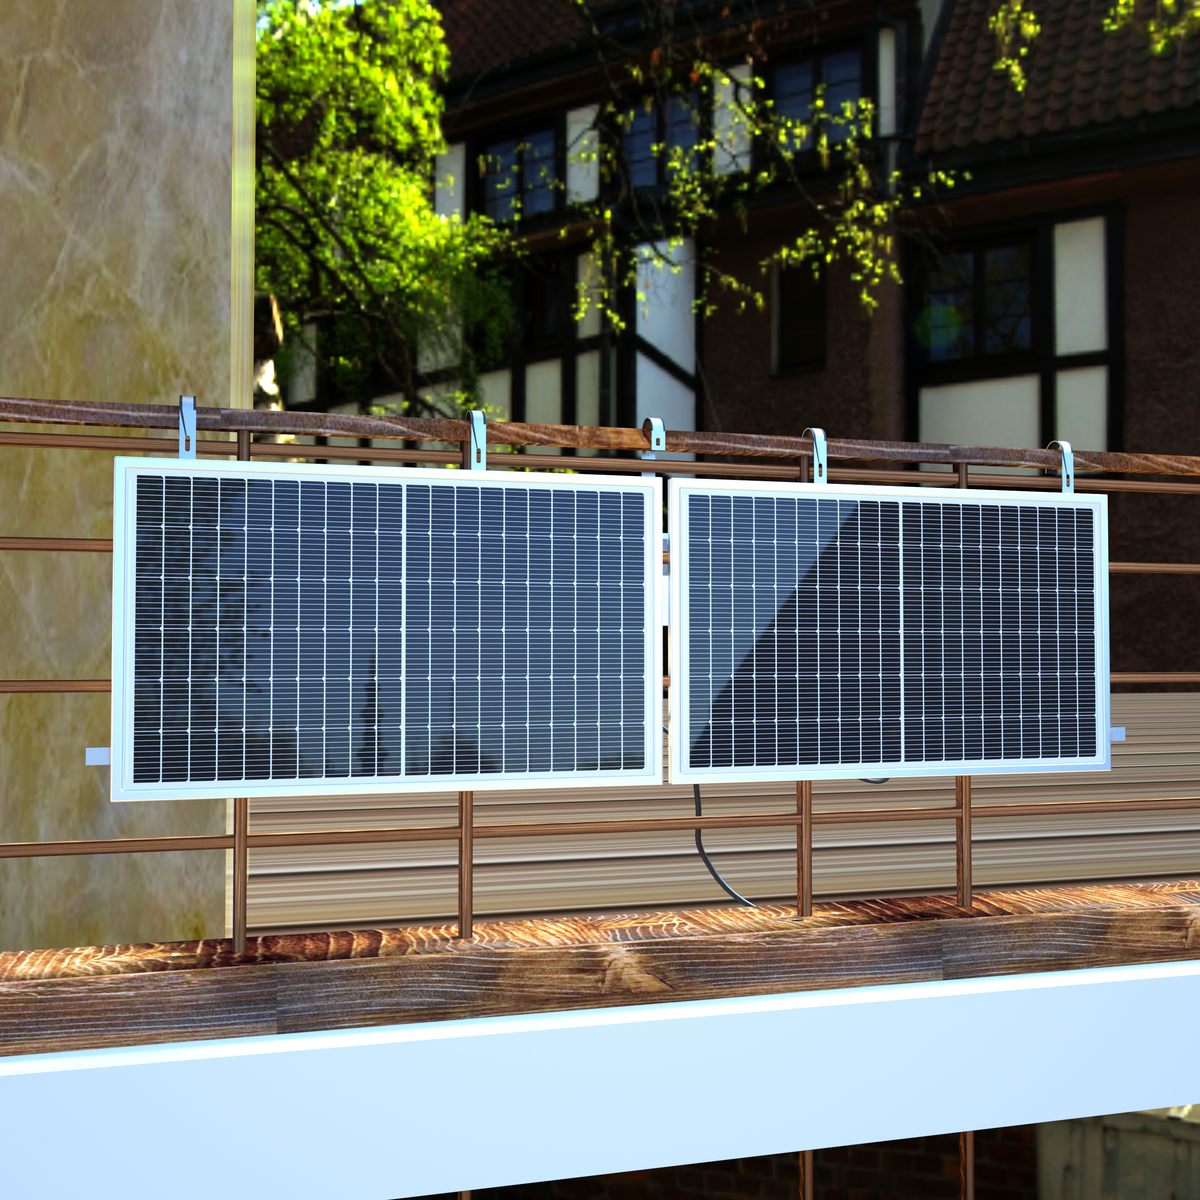 880W / 600W Balkonkraftwerk Upgradebar Photovoltaik Stecker Solaranlage